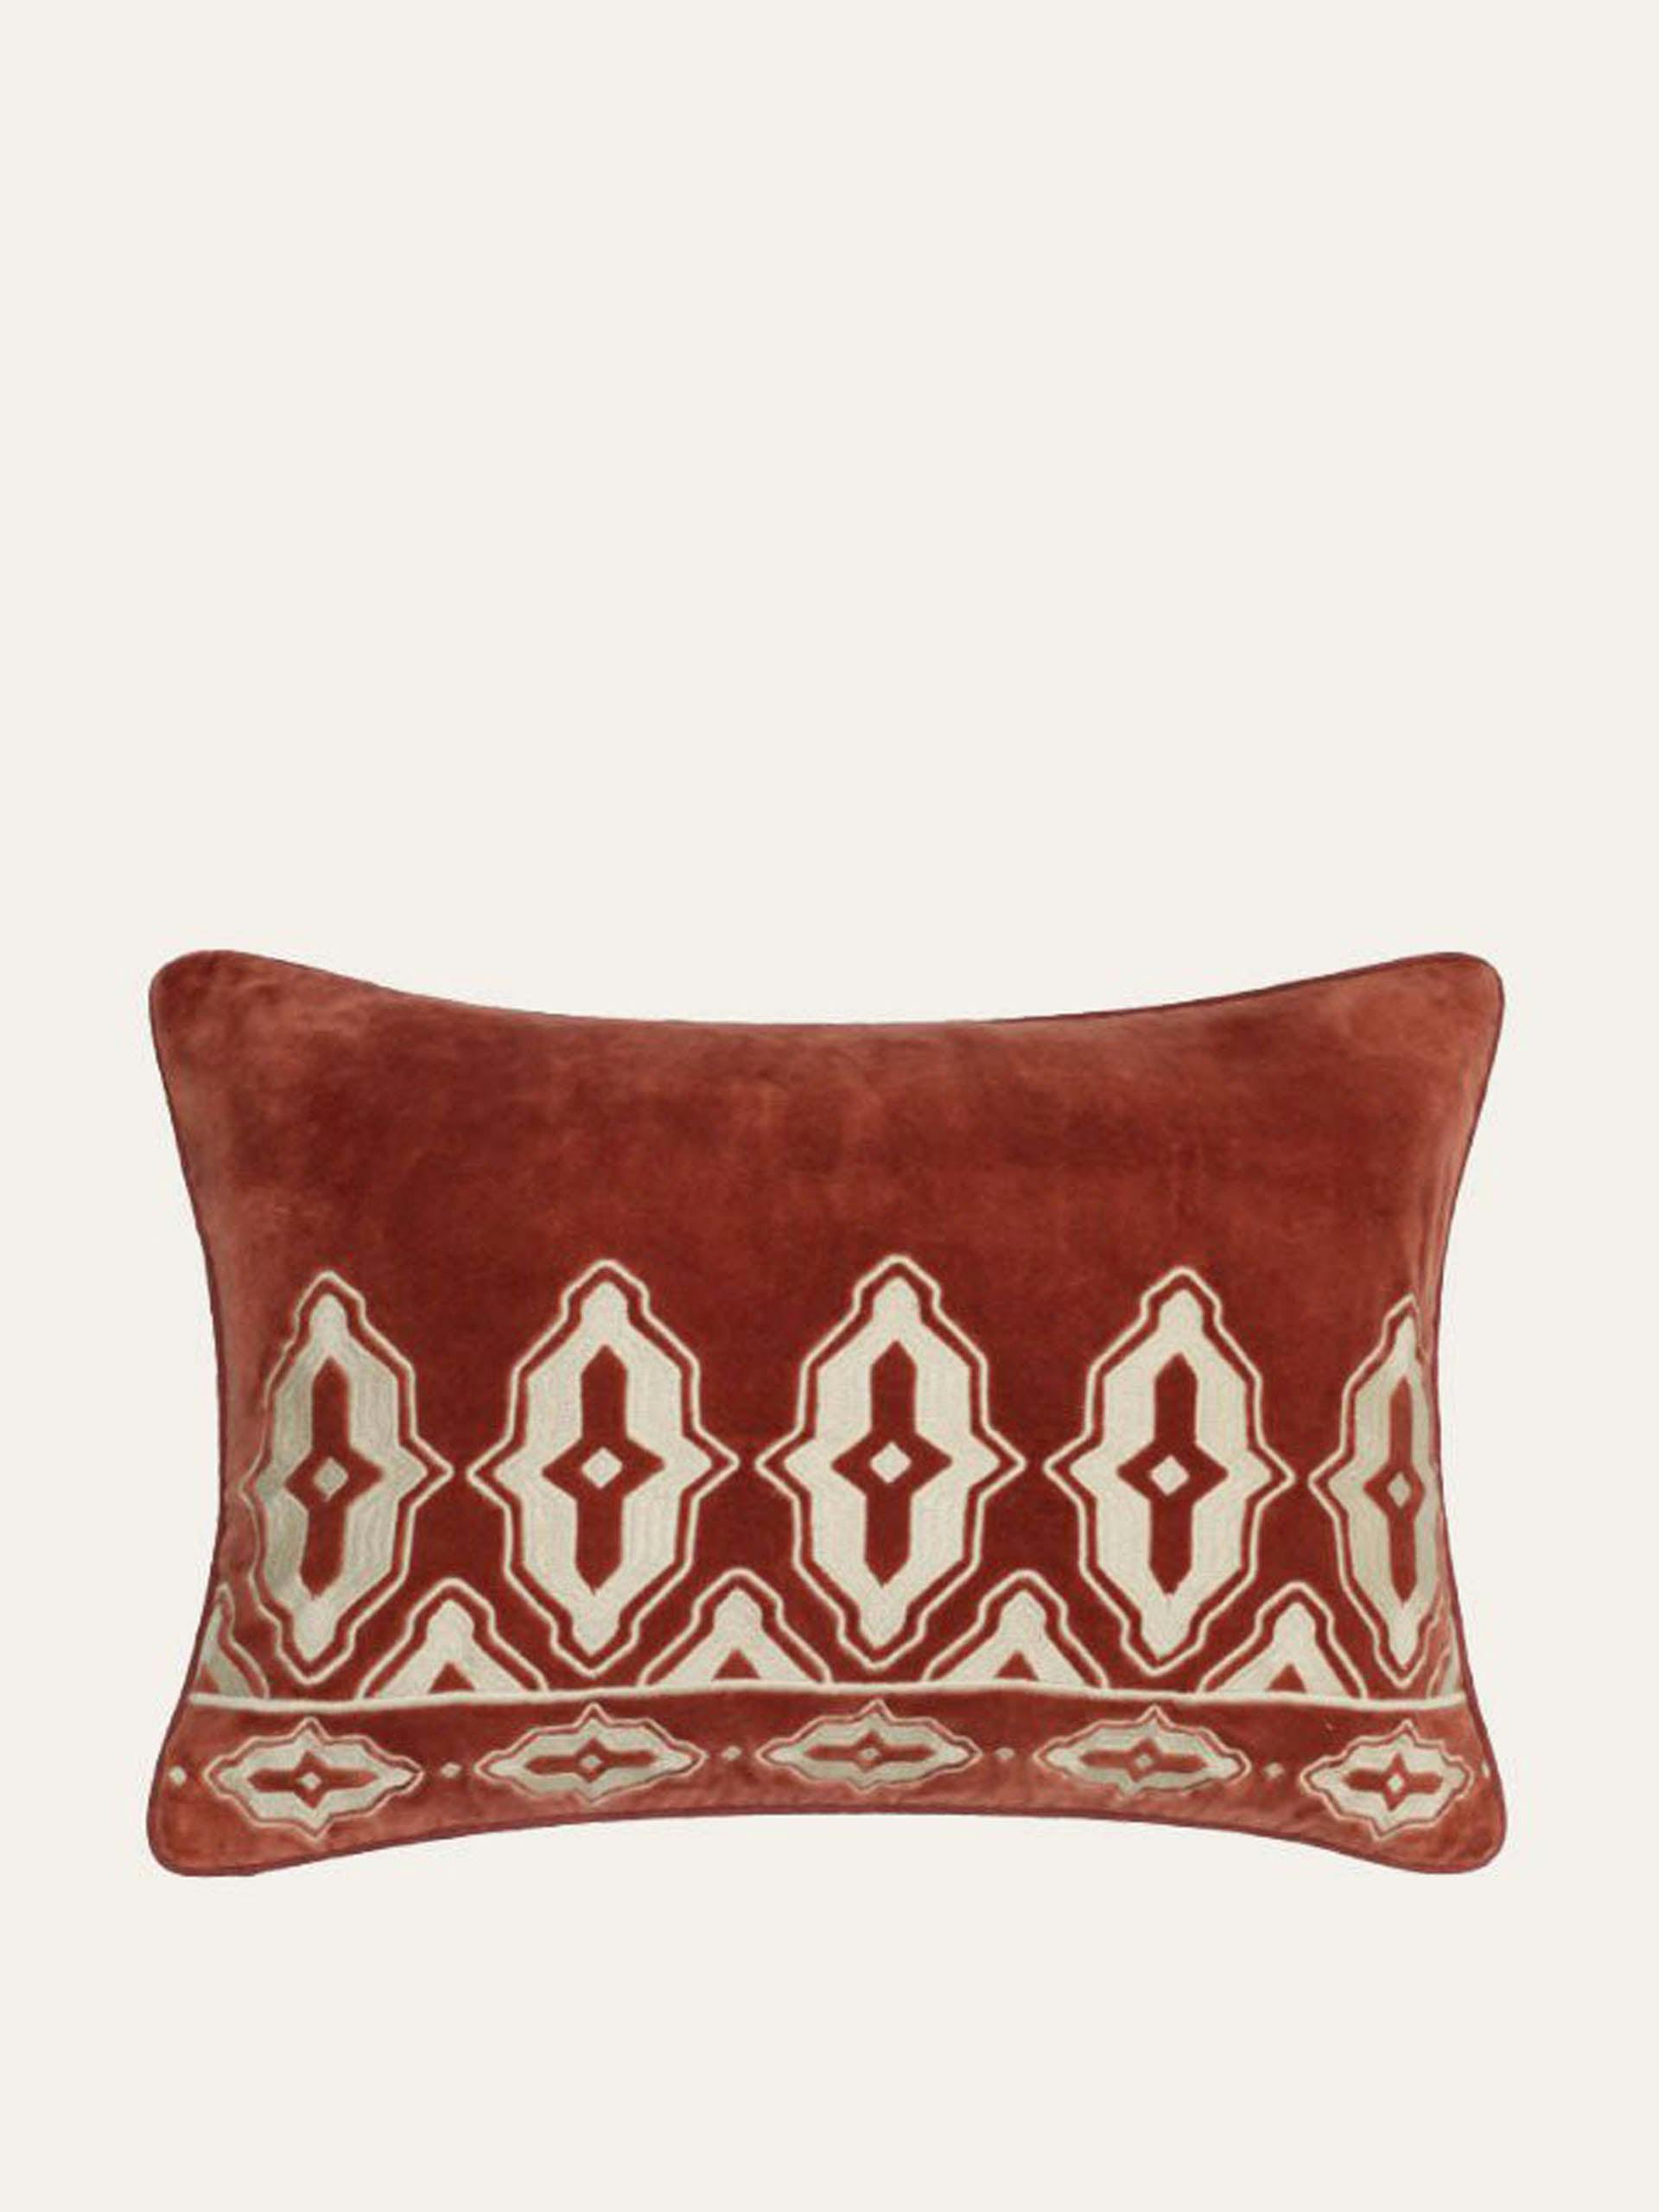 Carmine red velvet Tara embroidered cushion